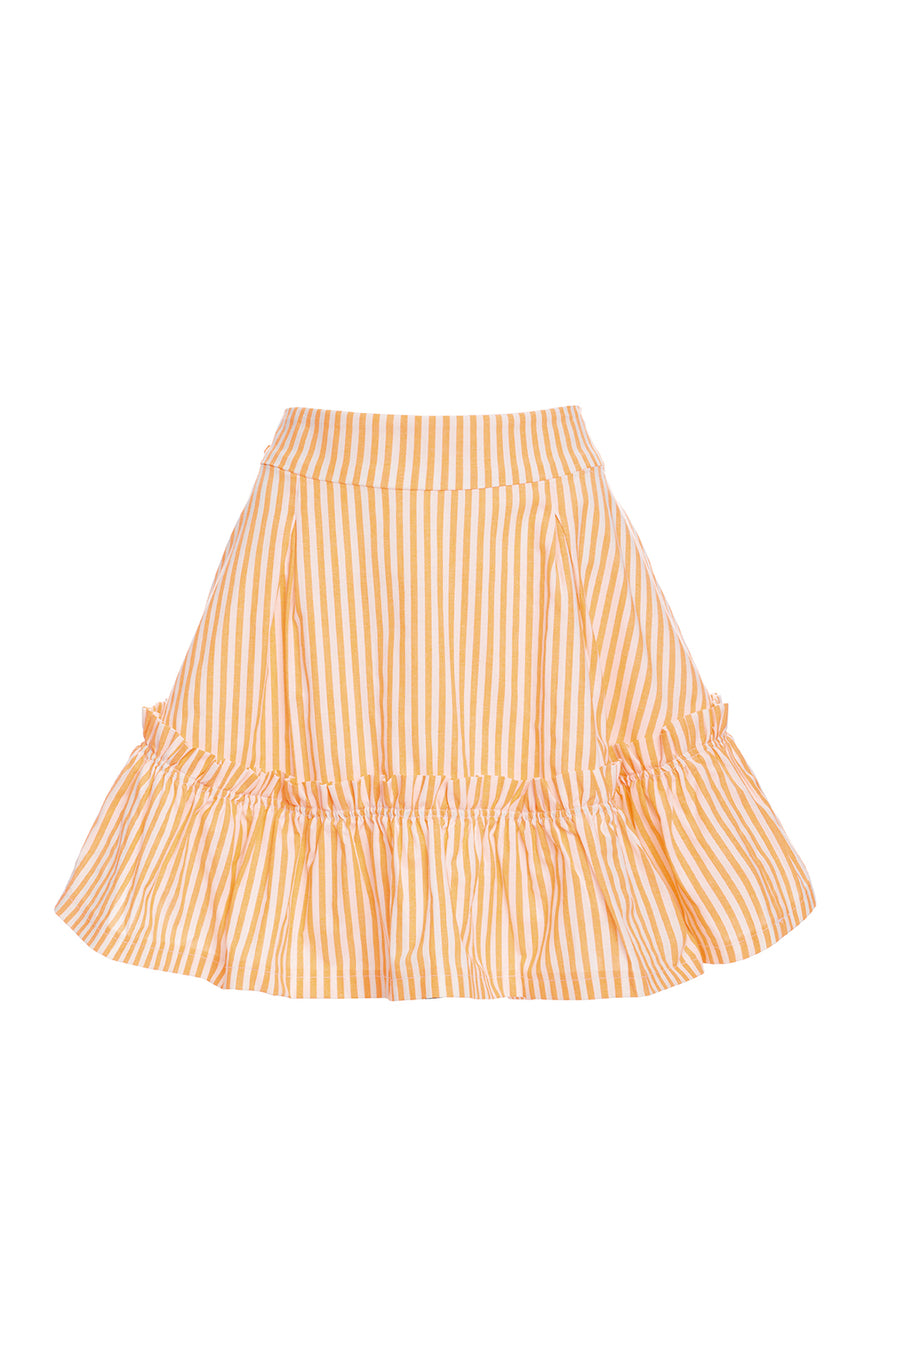 Quinoa Skirt Orange Candy Stripe